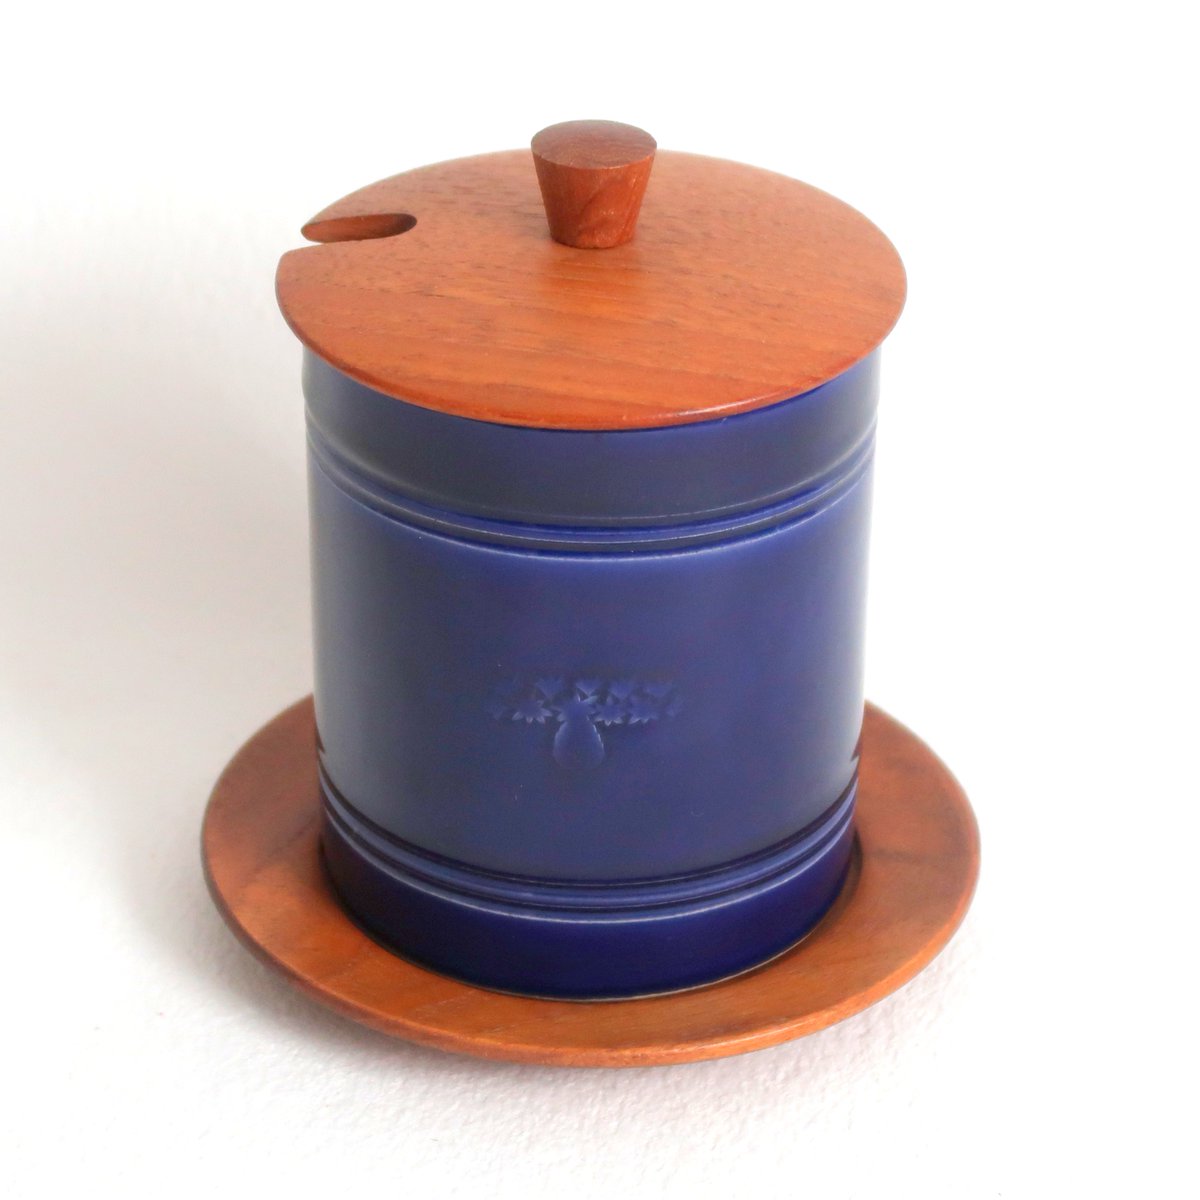 etsy.com/se-en/listing/… Swedish ceramic preserve pot with teak lid and tray by Torreboda Keramik, #etsyvintage #1960s #Scandinaviandesign , #midcenturymodern #jampot #teak #ceramic #newinstore #cherryforest